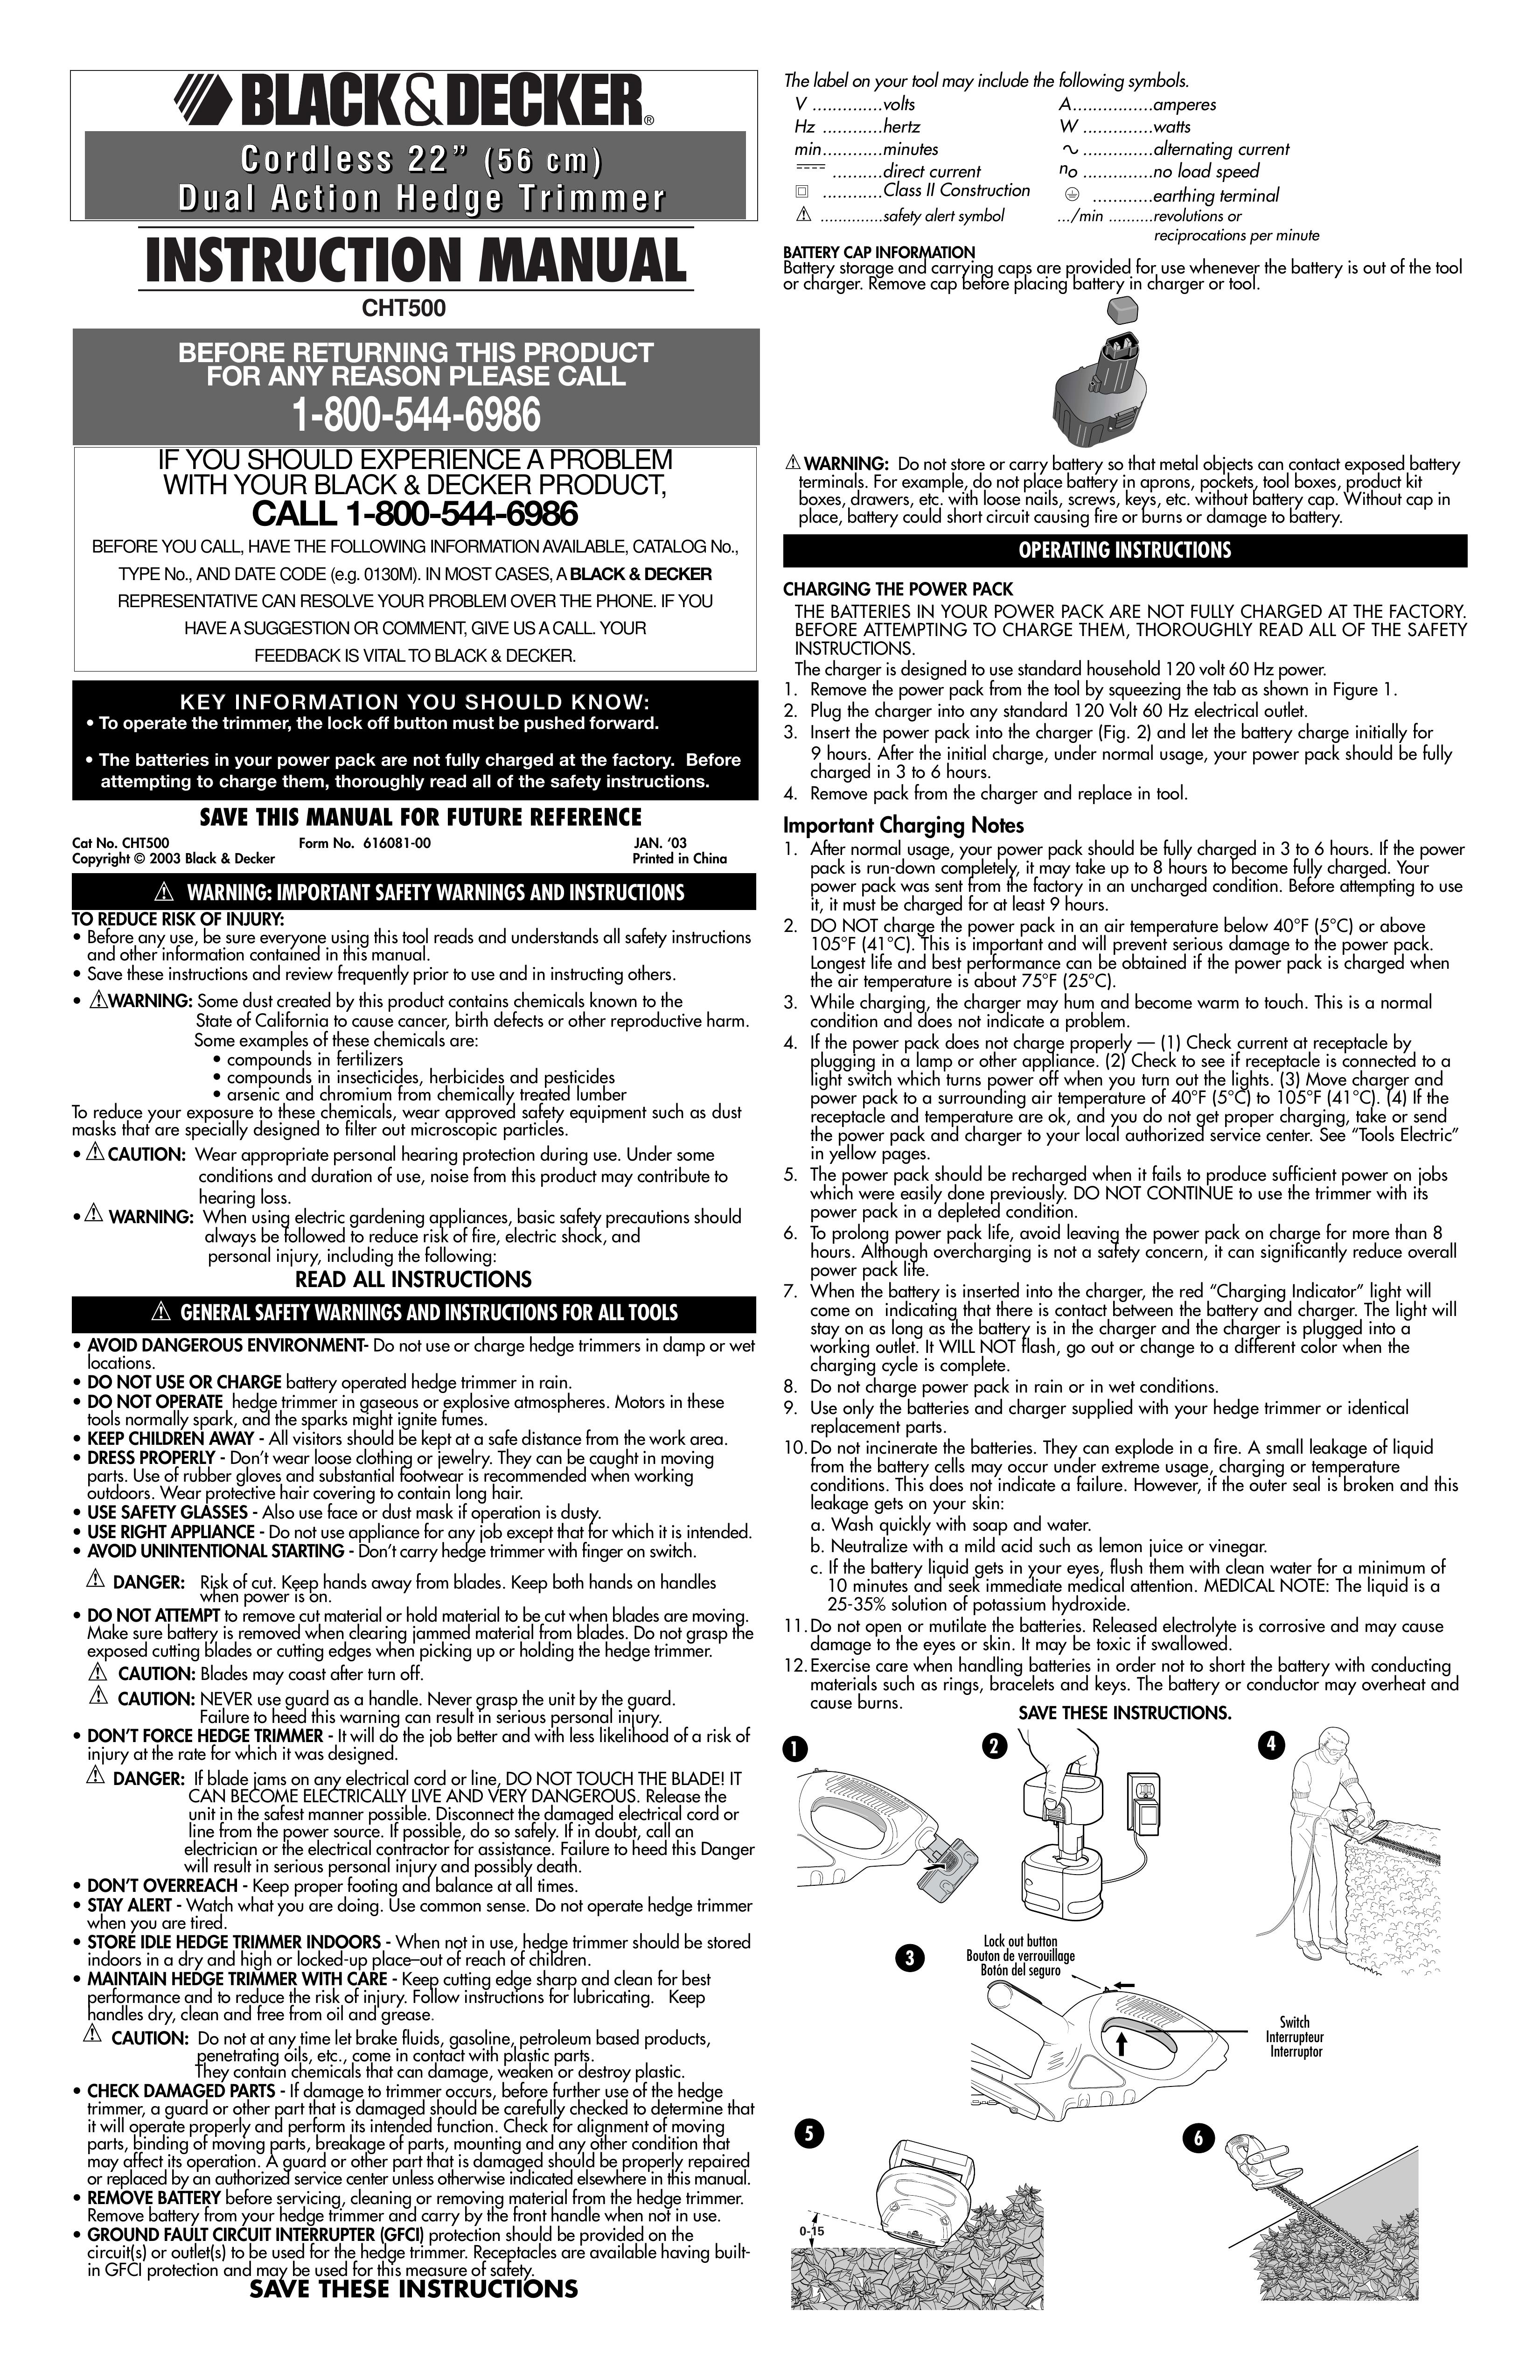 Black & Decker 616081-00 Trimmer User Manual